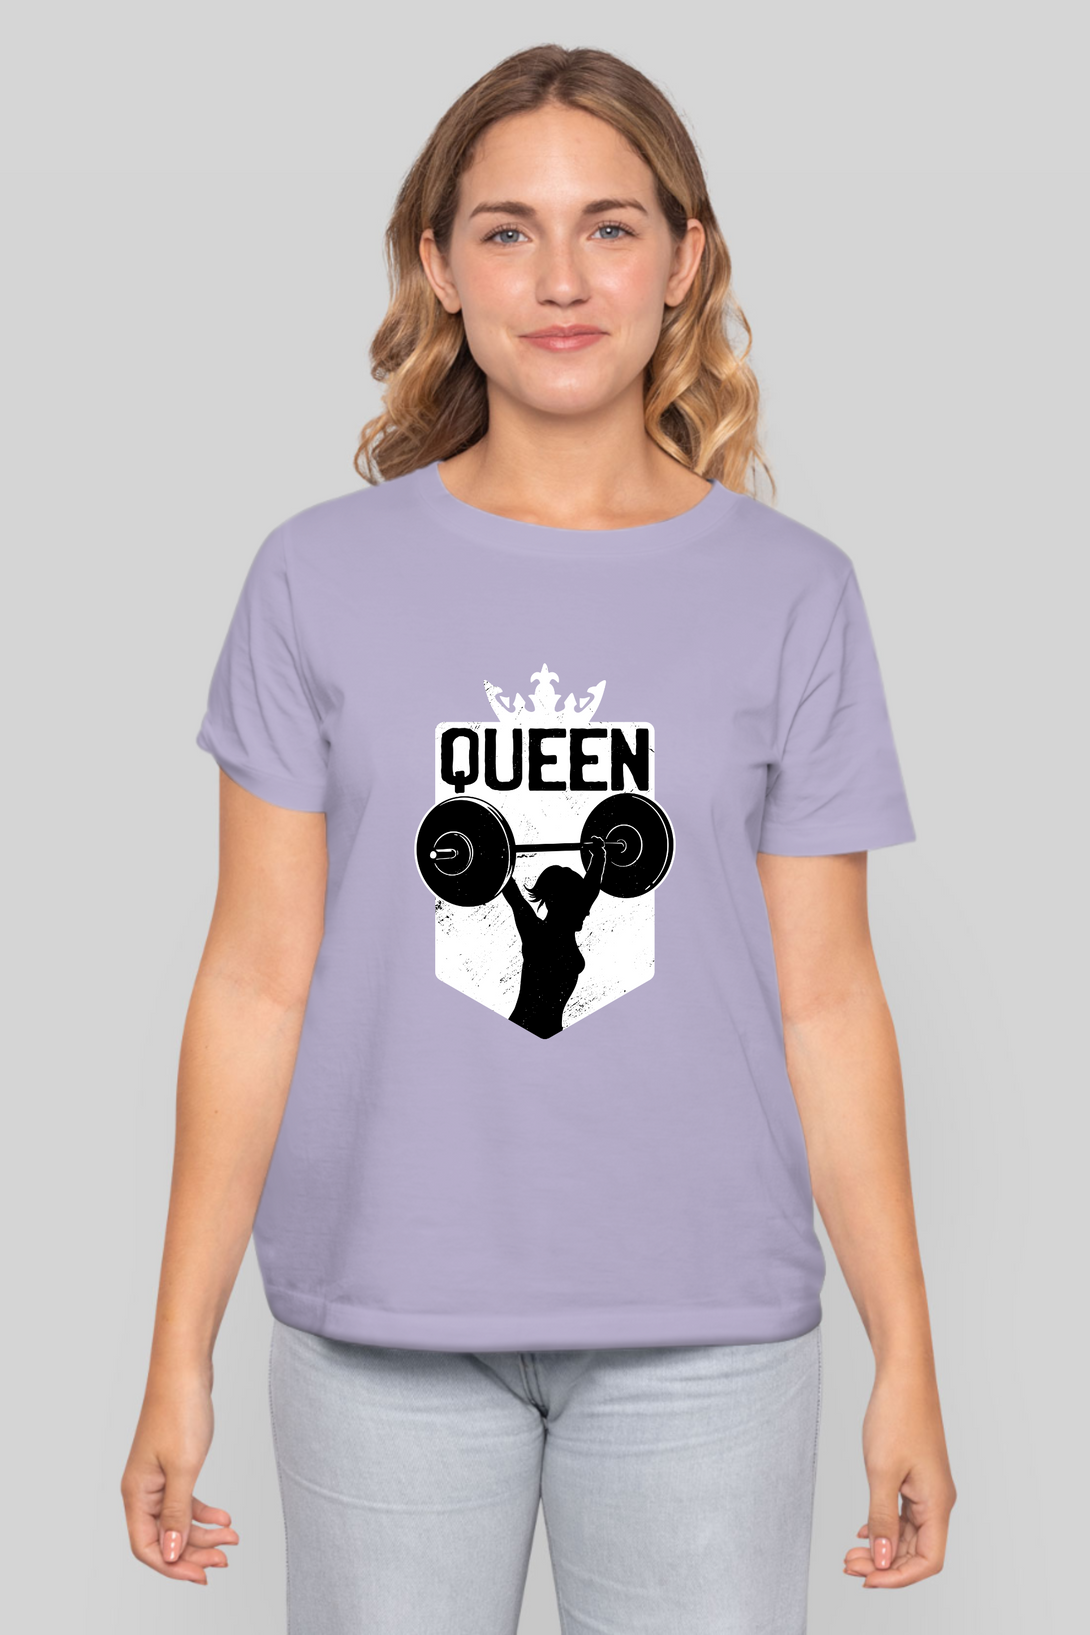 Queen Printed T-Shirt For Women - WowWaves - 8